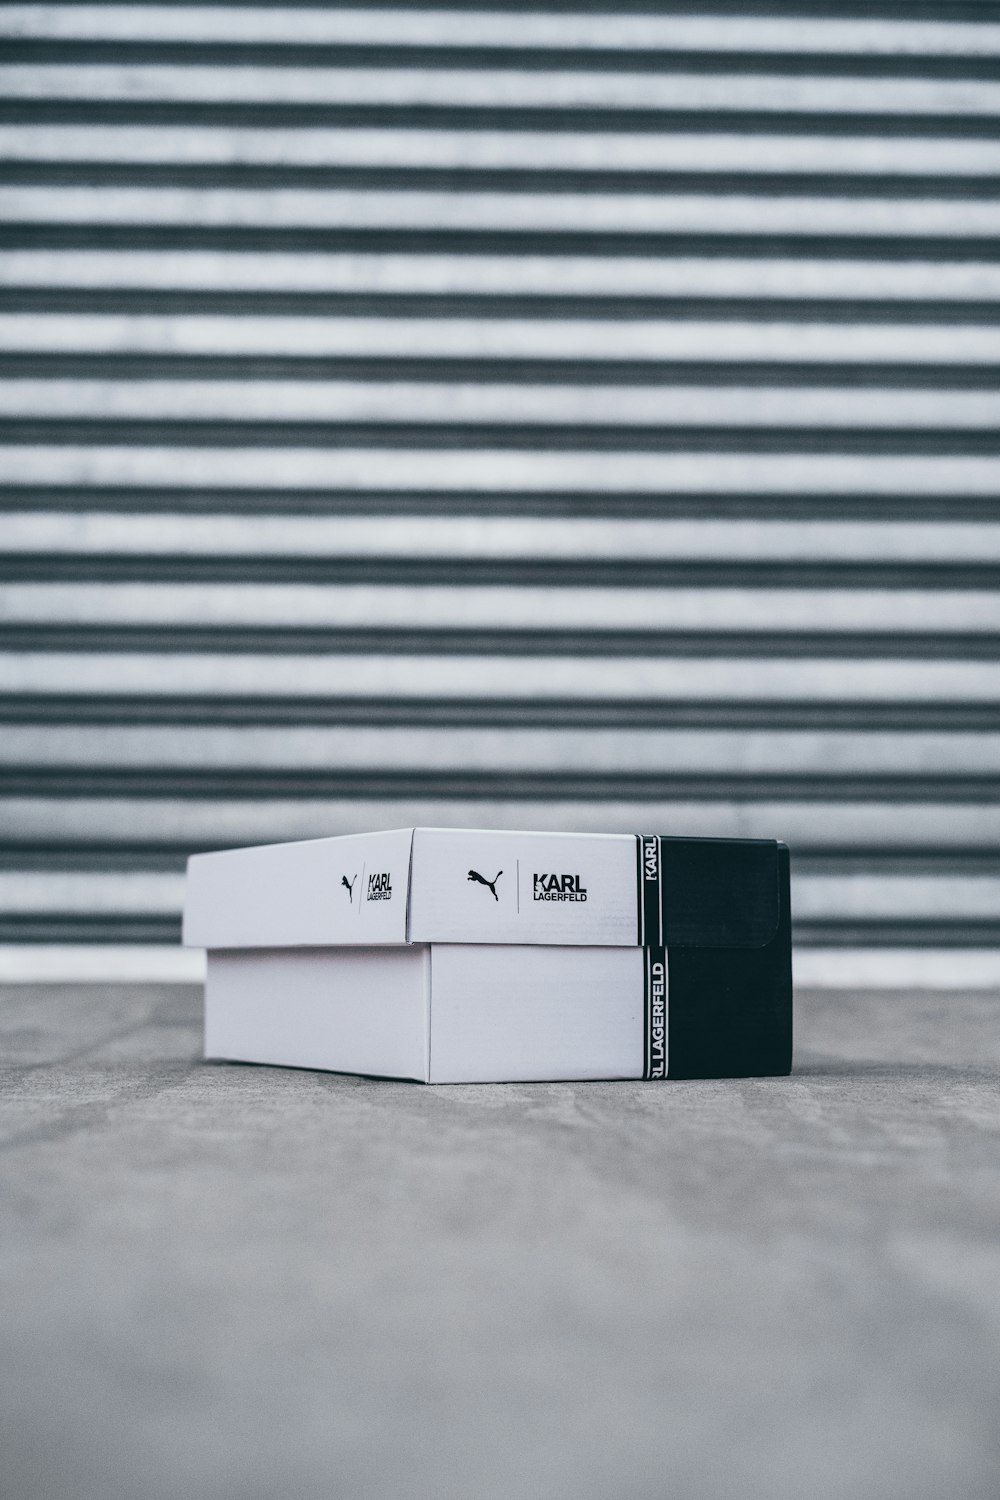 white and black Puma shoe boxes